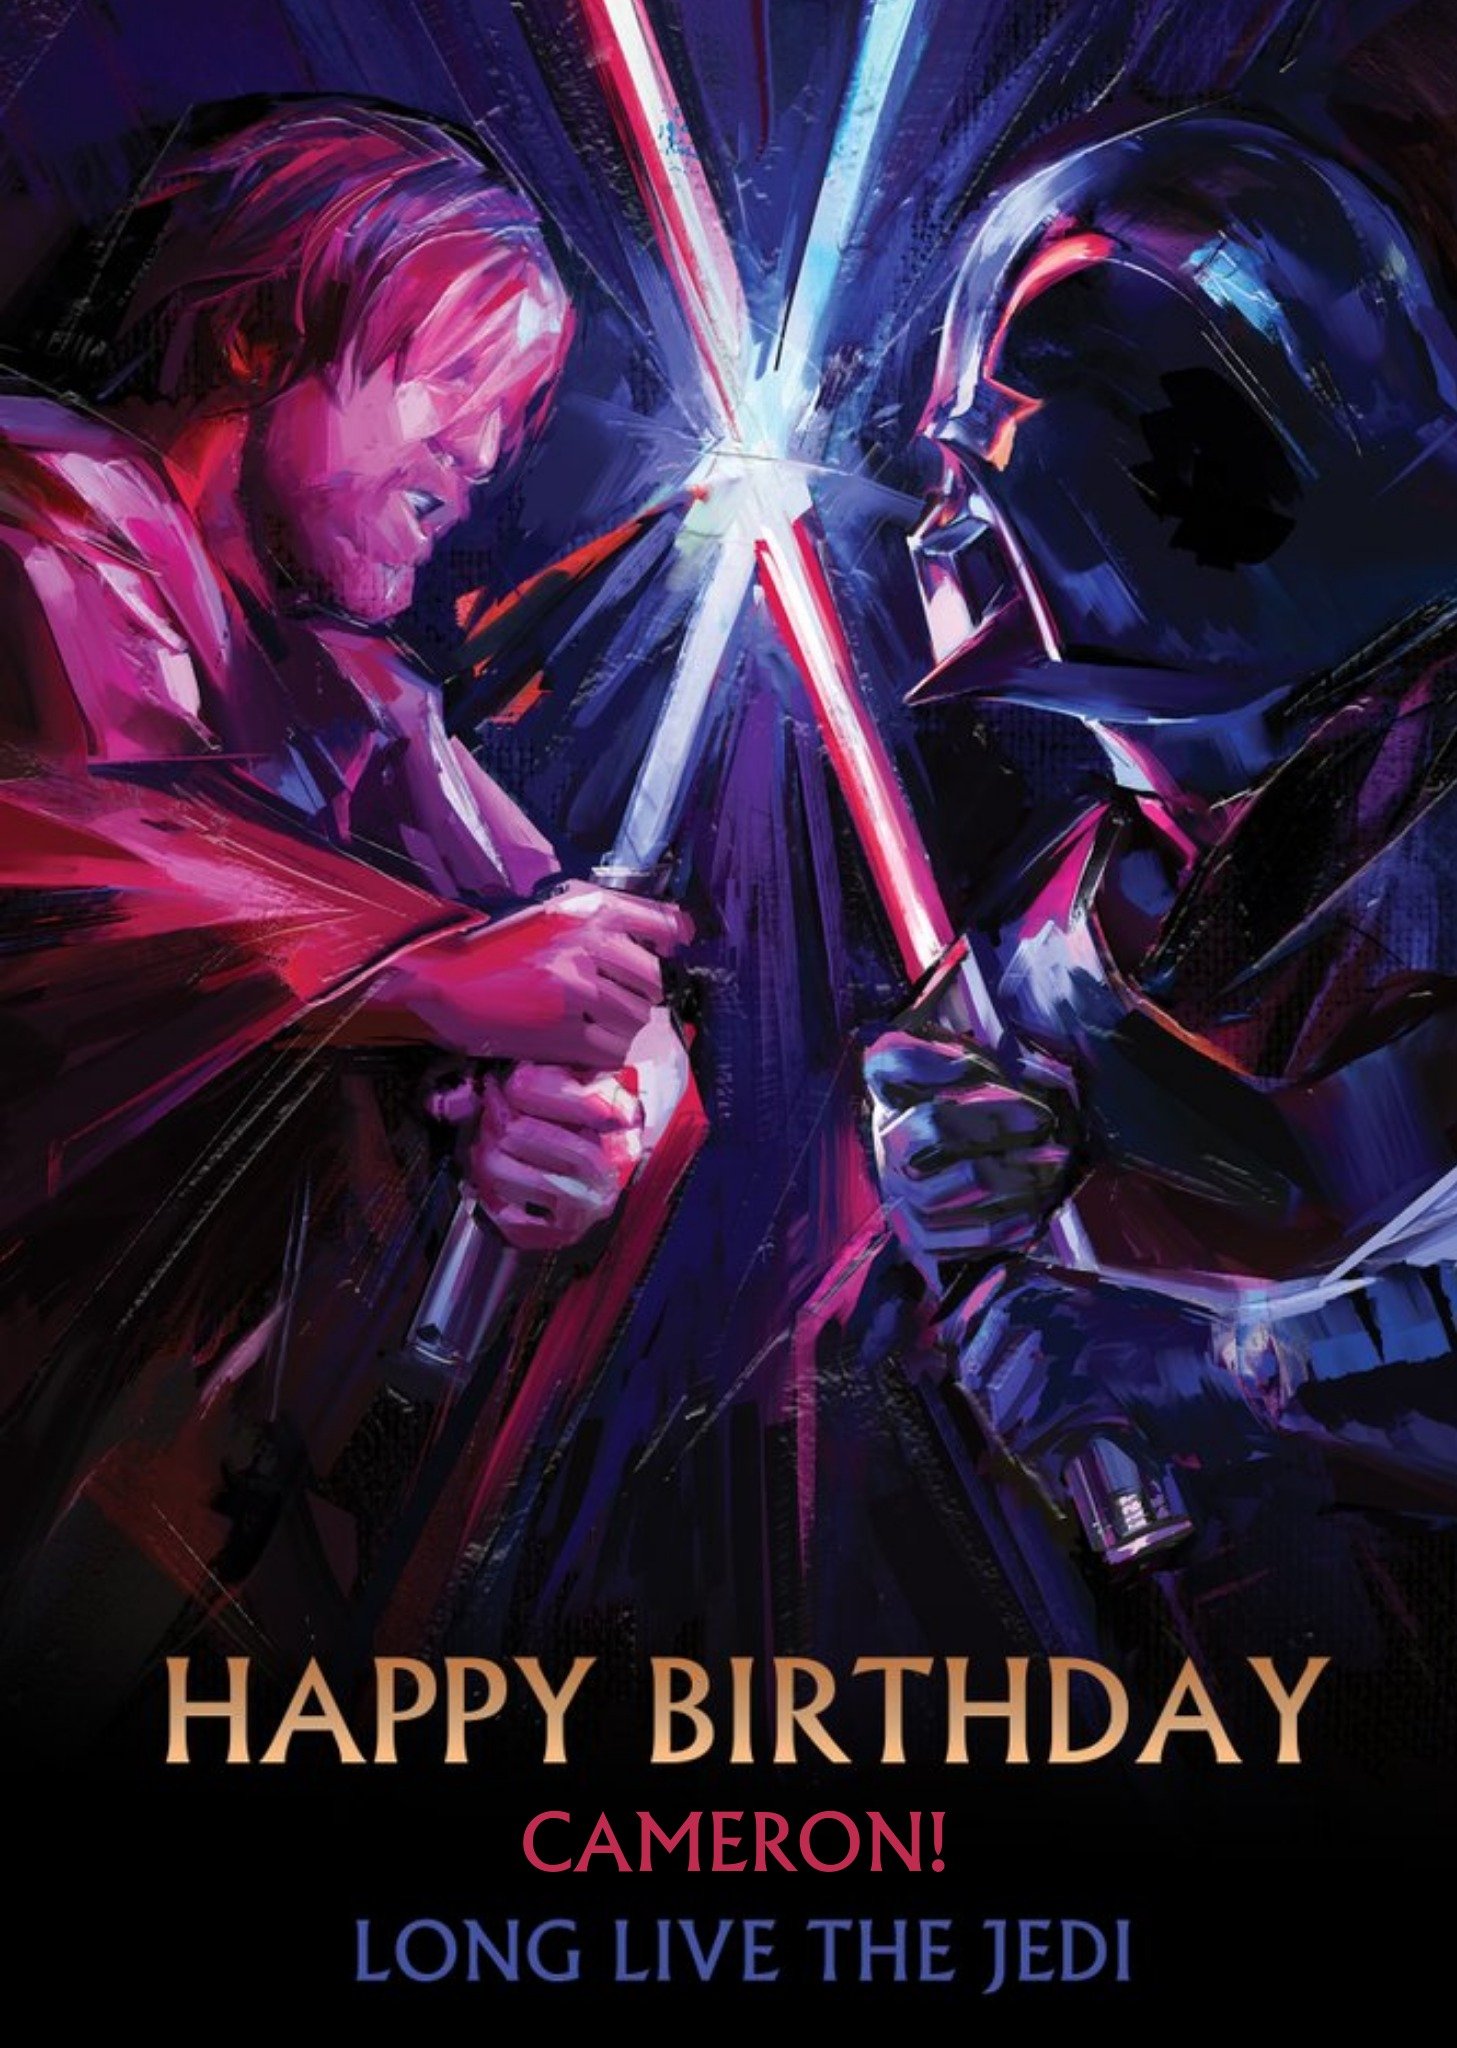 Obi Wan Kenobi Dueling Darth Vader Painted Star Wars Birthday Card, Large